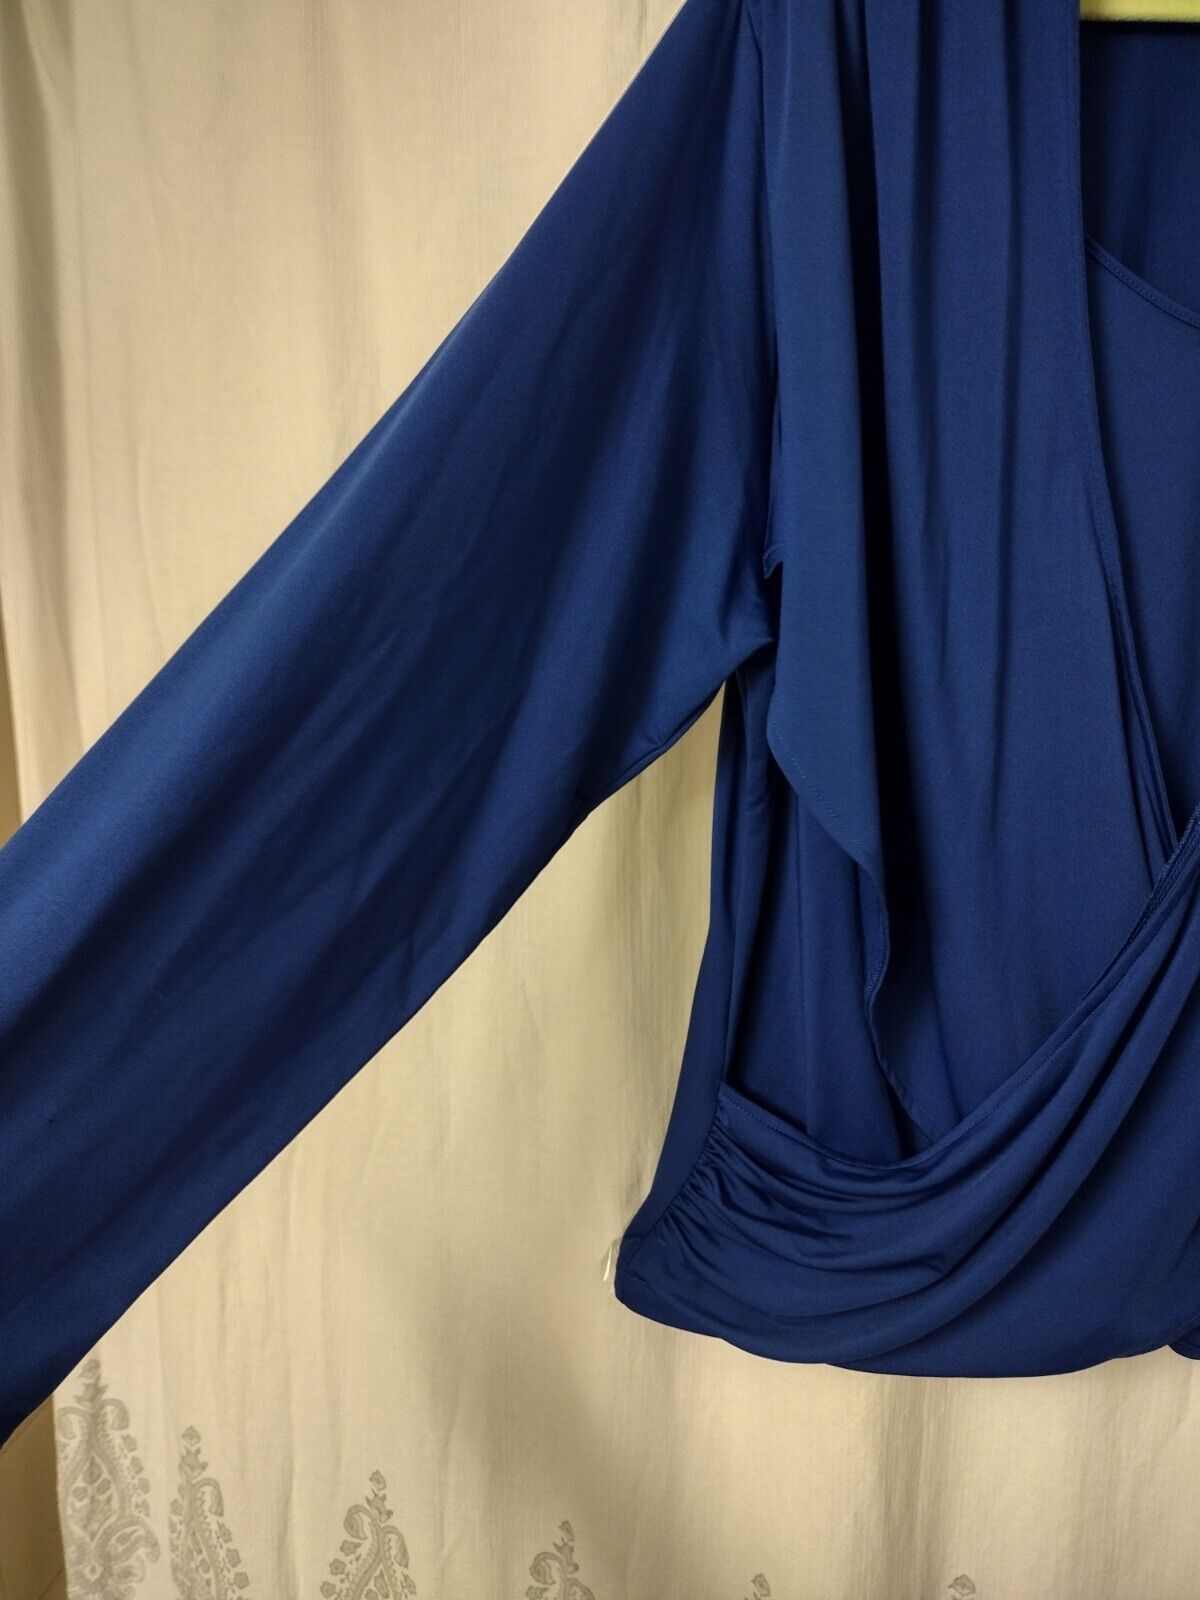 Jessica London Plus Size 26 28 Royal Blue Surplic… - image 5